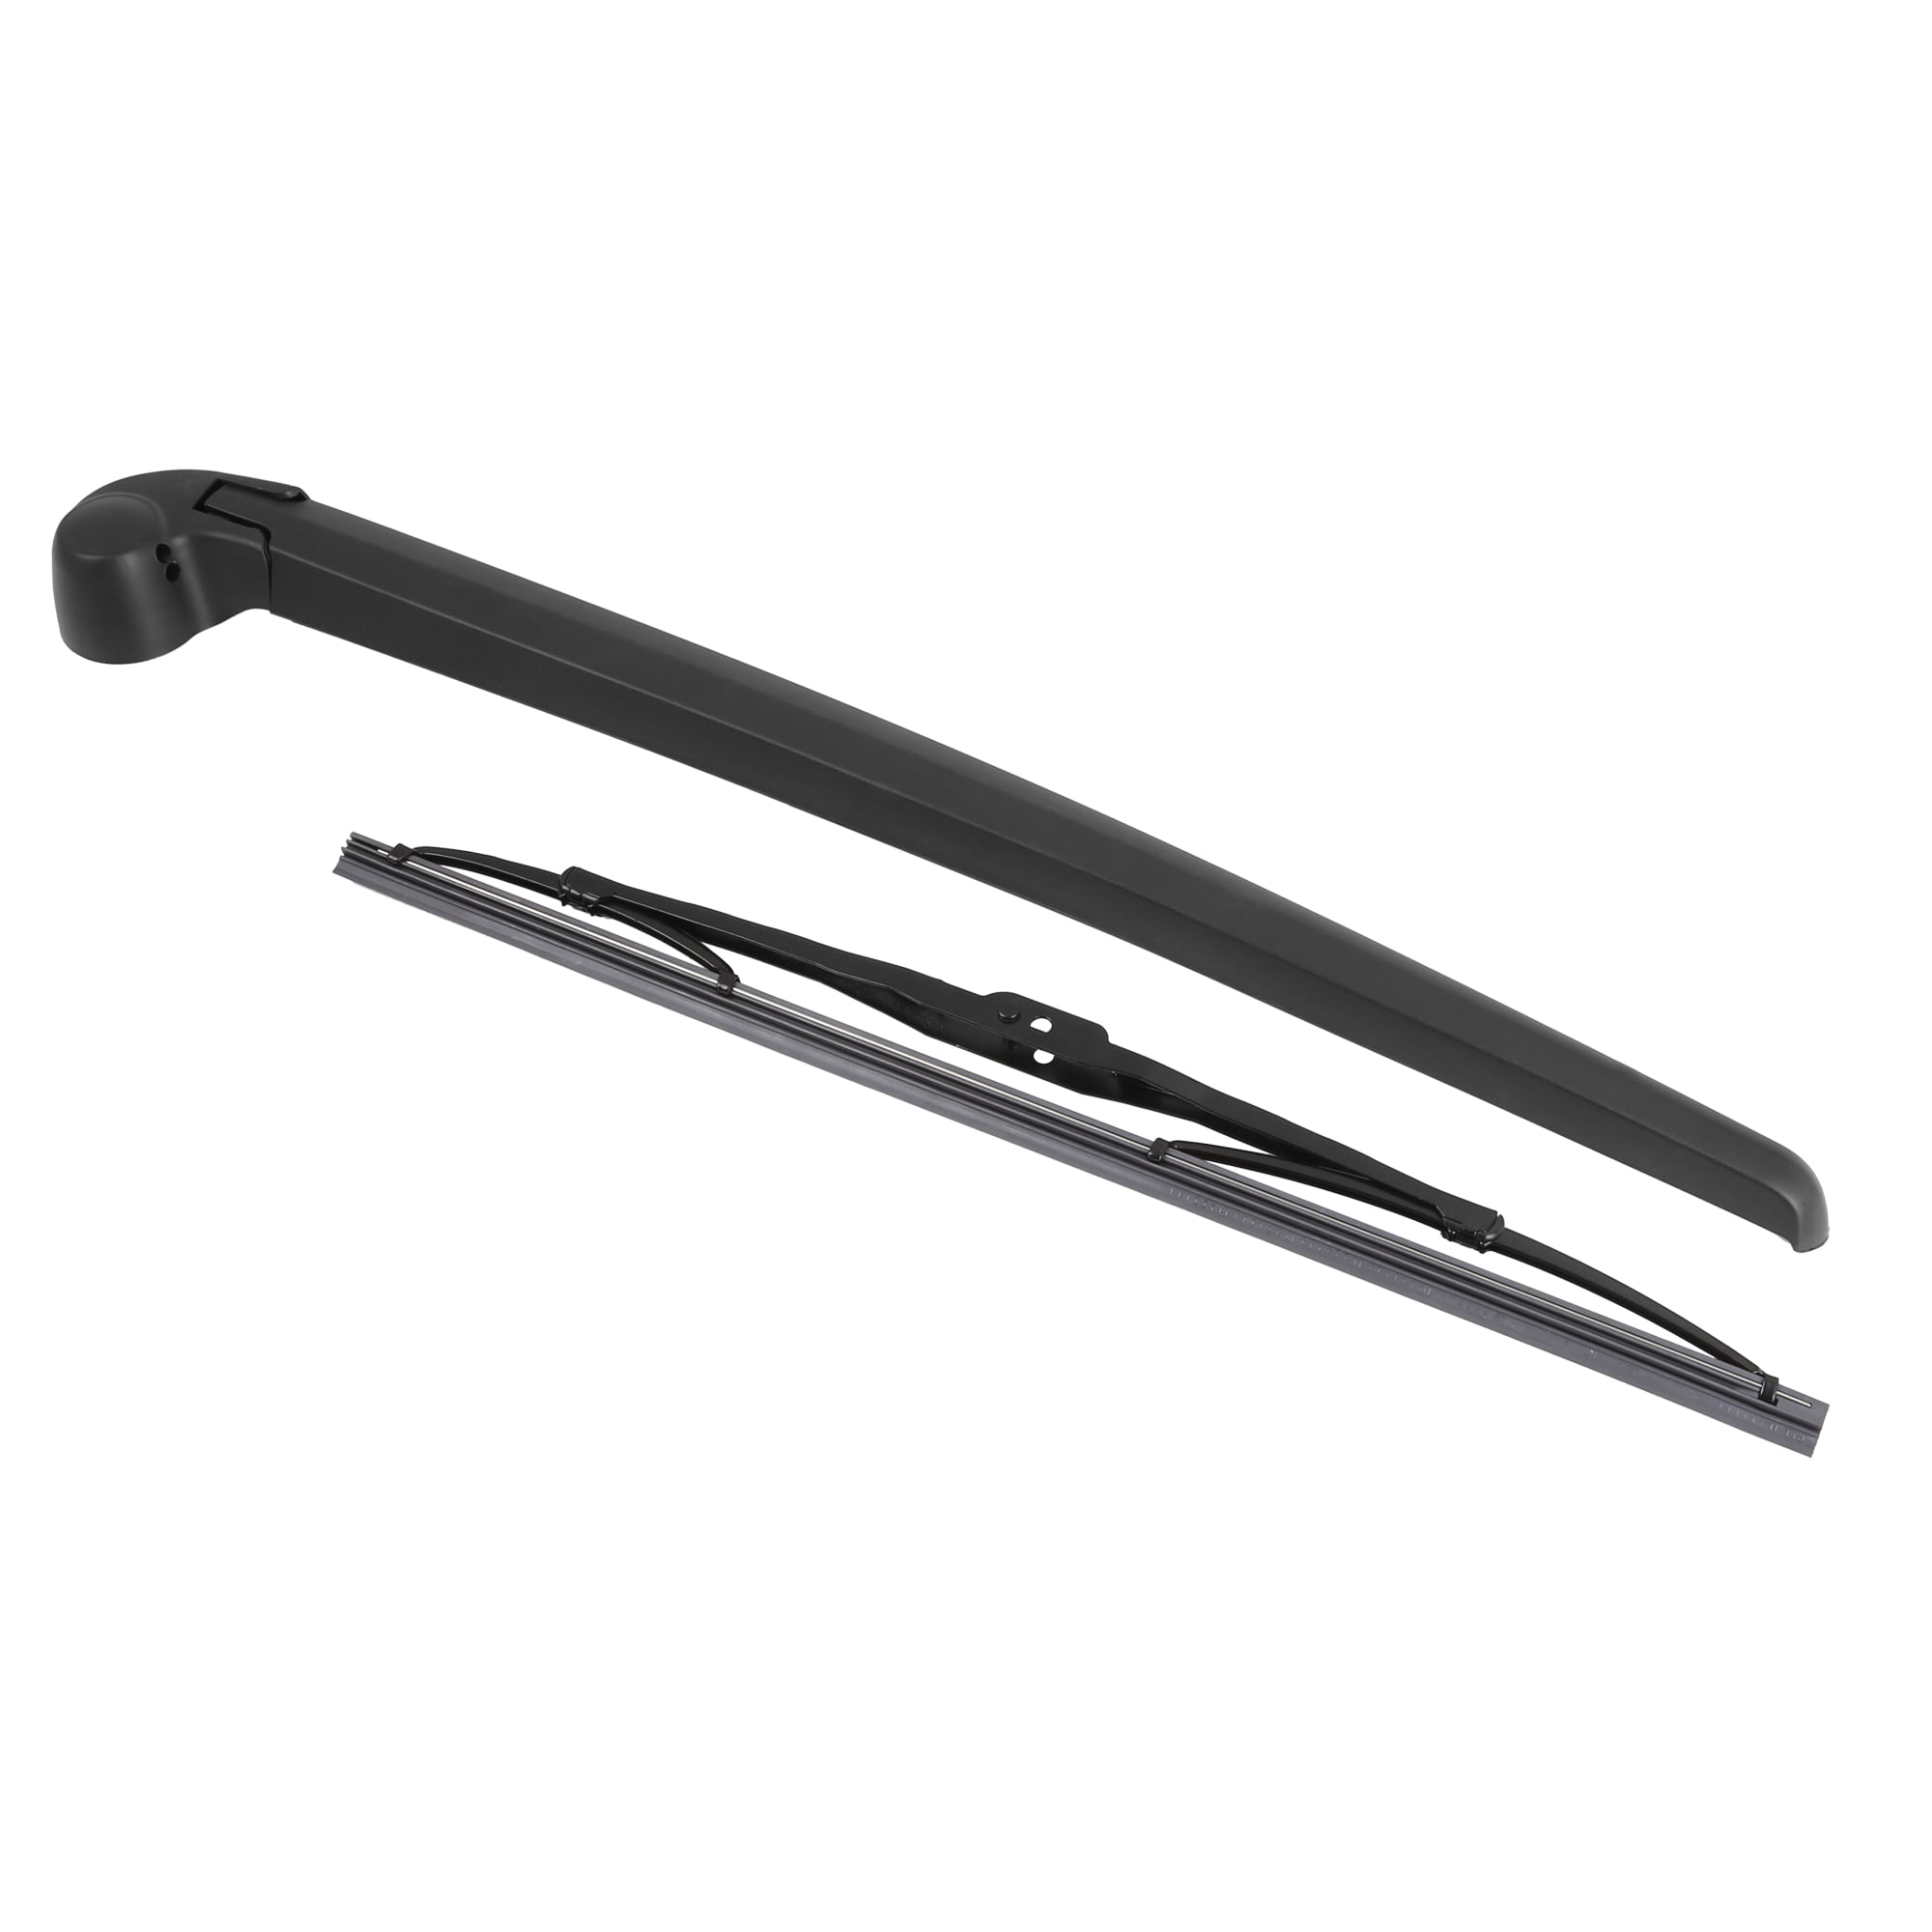 Rear Windshield Wiper Blade Arm Set 355mm 14 Inch for AUDI Q7 2006-2015 | Walmart Canada 2015 Audi Q7 Rear Wiper Blade Size